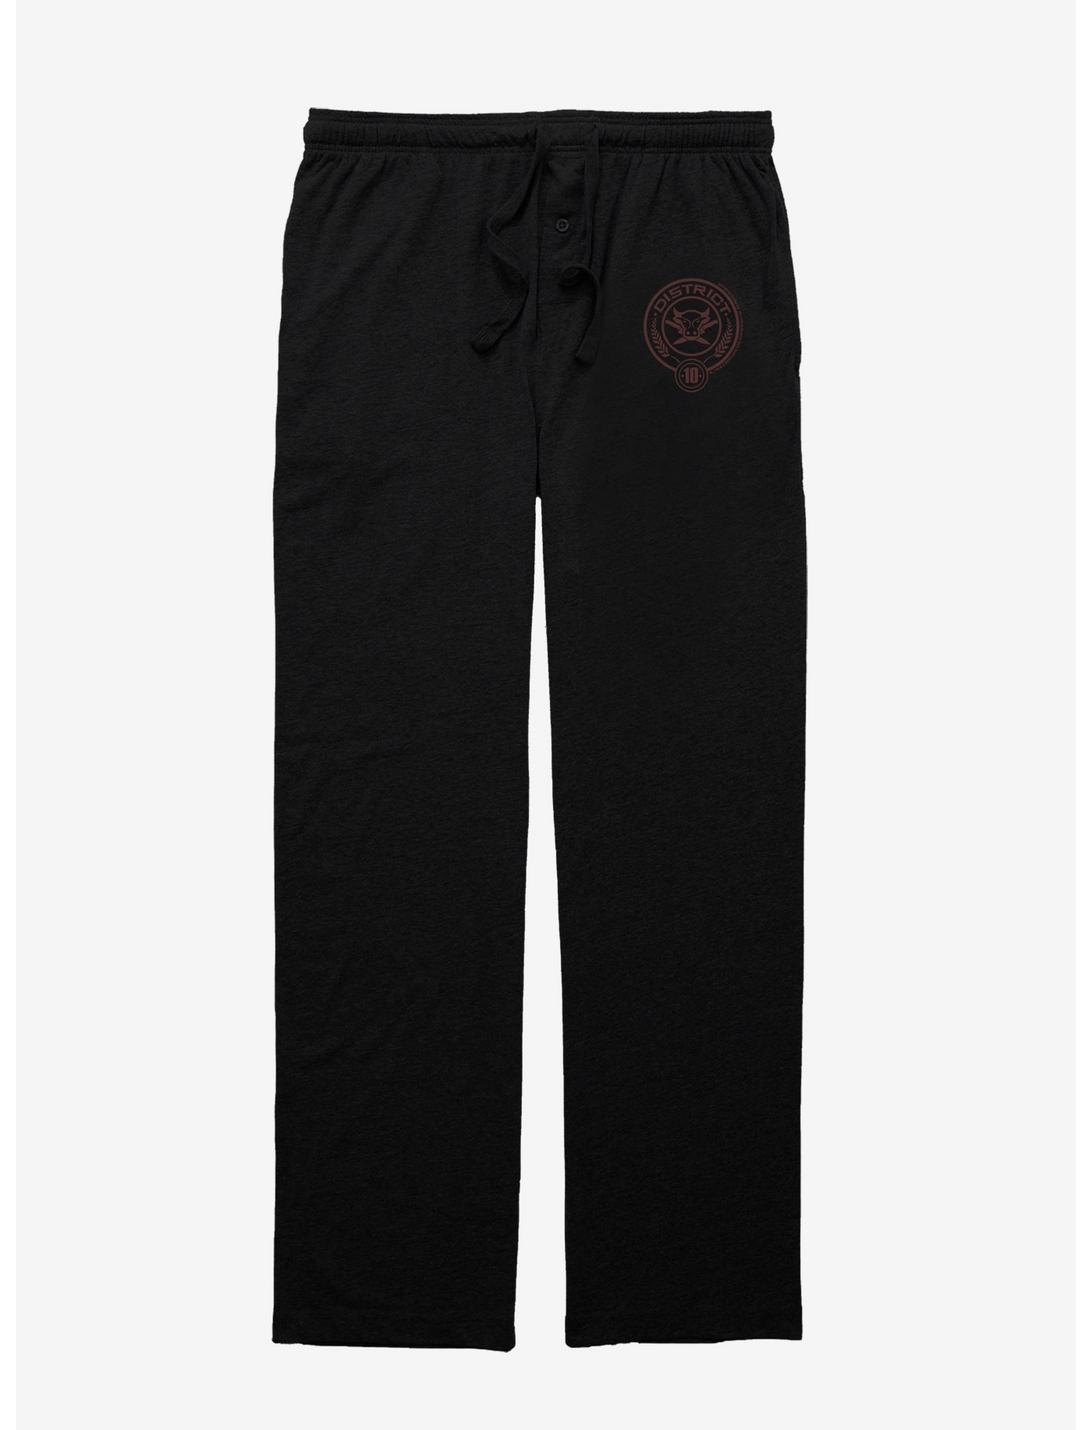 Hunger Games District 10 Emblem Pajama Pants, BLACK, hi-res